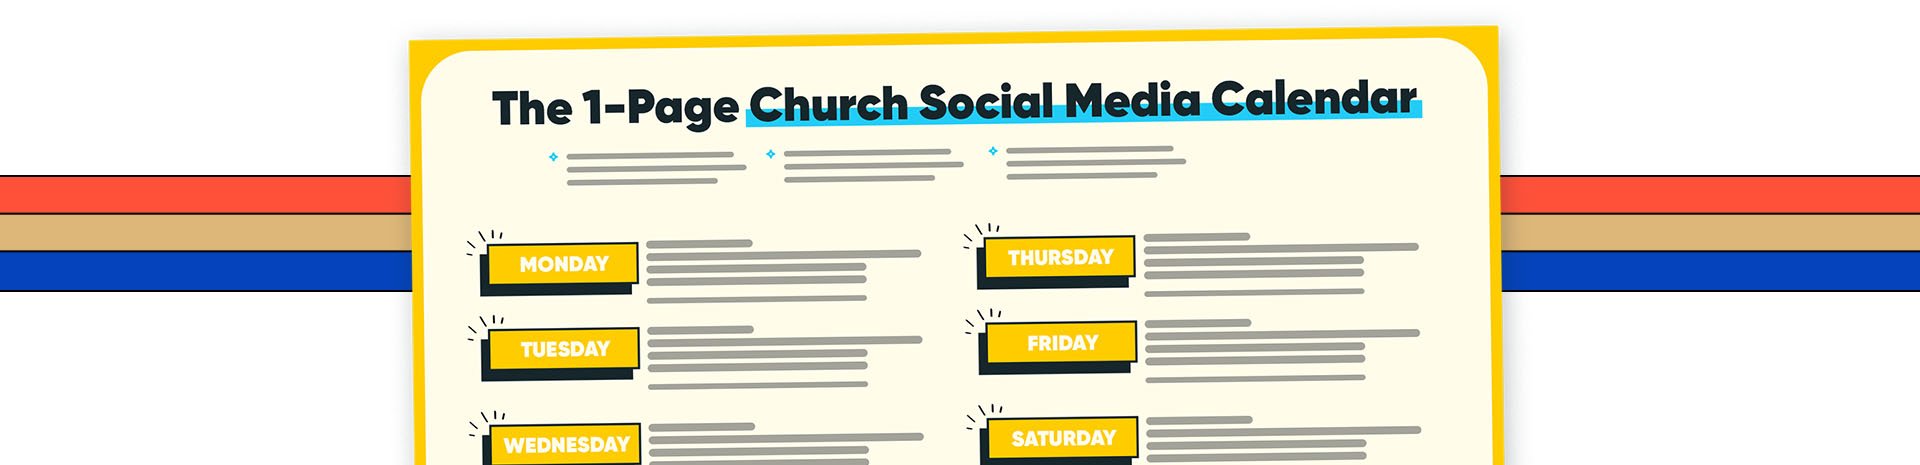 Pro Church Tools - Brady Shearer - The 1-Page Church Social Media Calendar